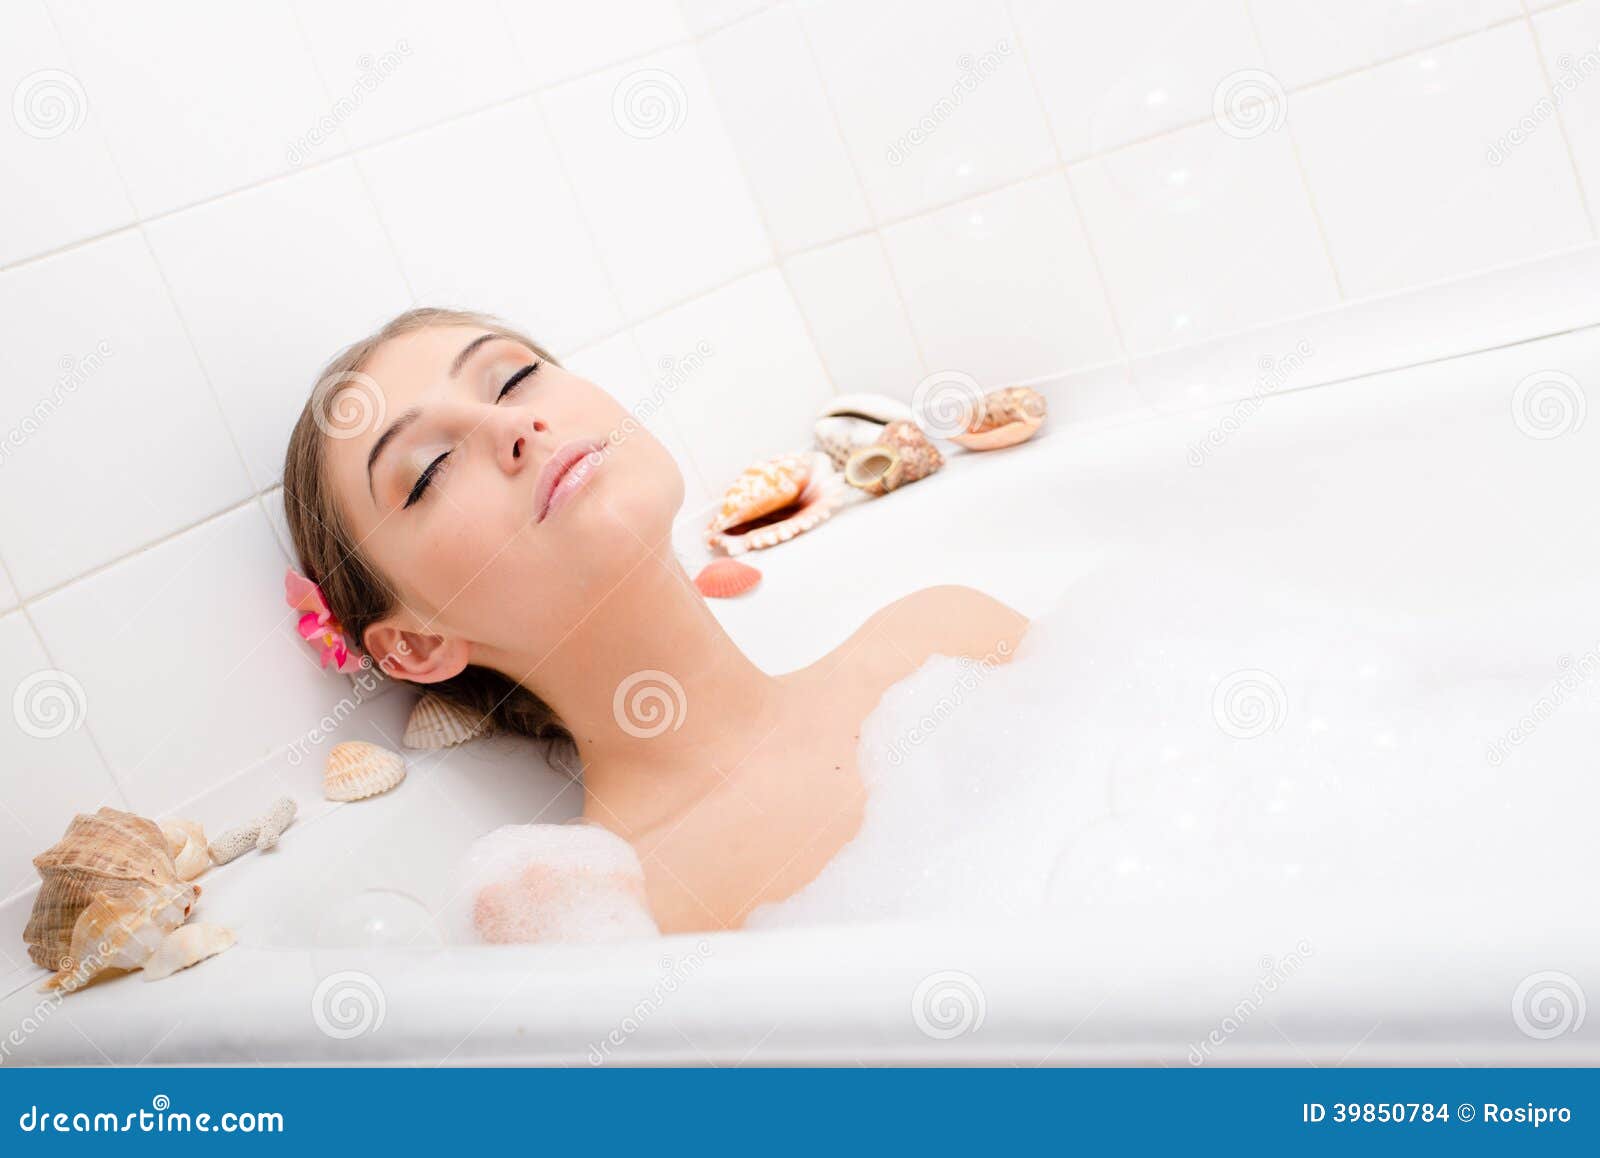 740 Bath Selfie Stock Photos